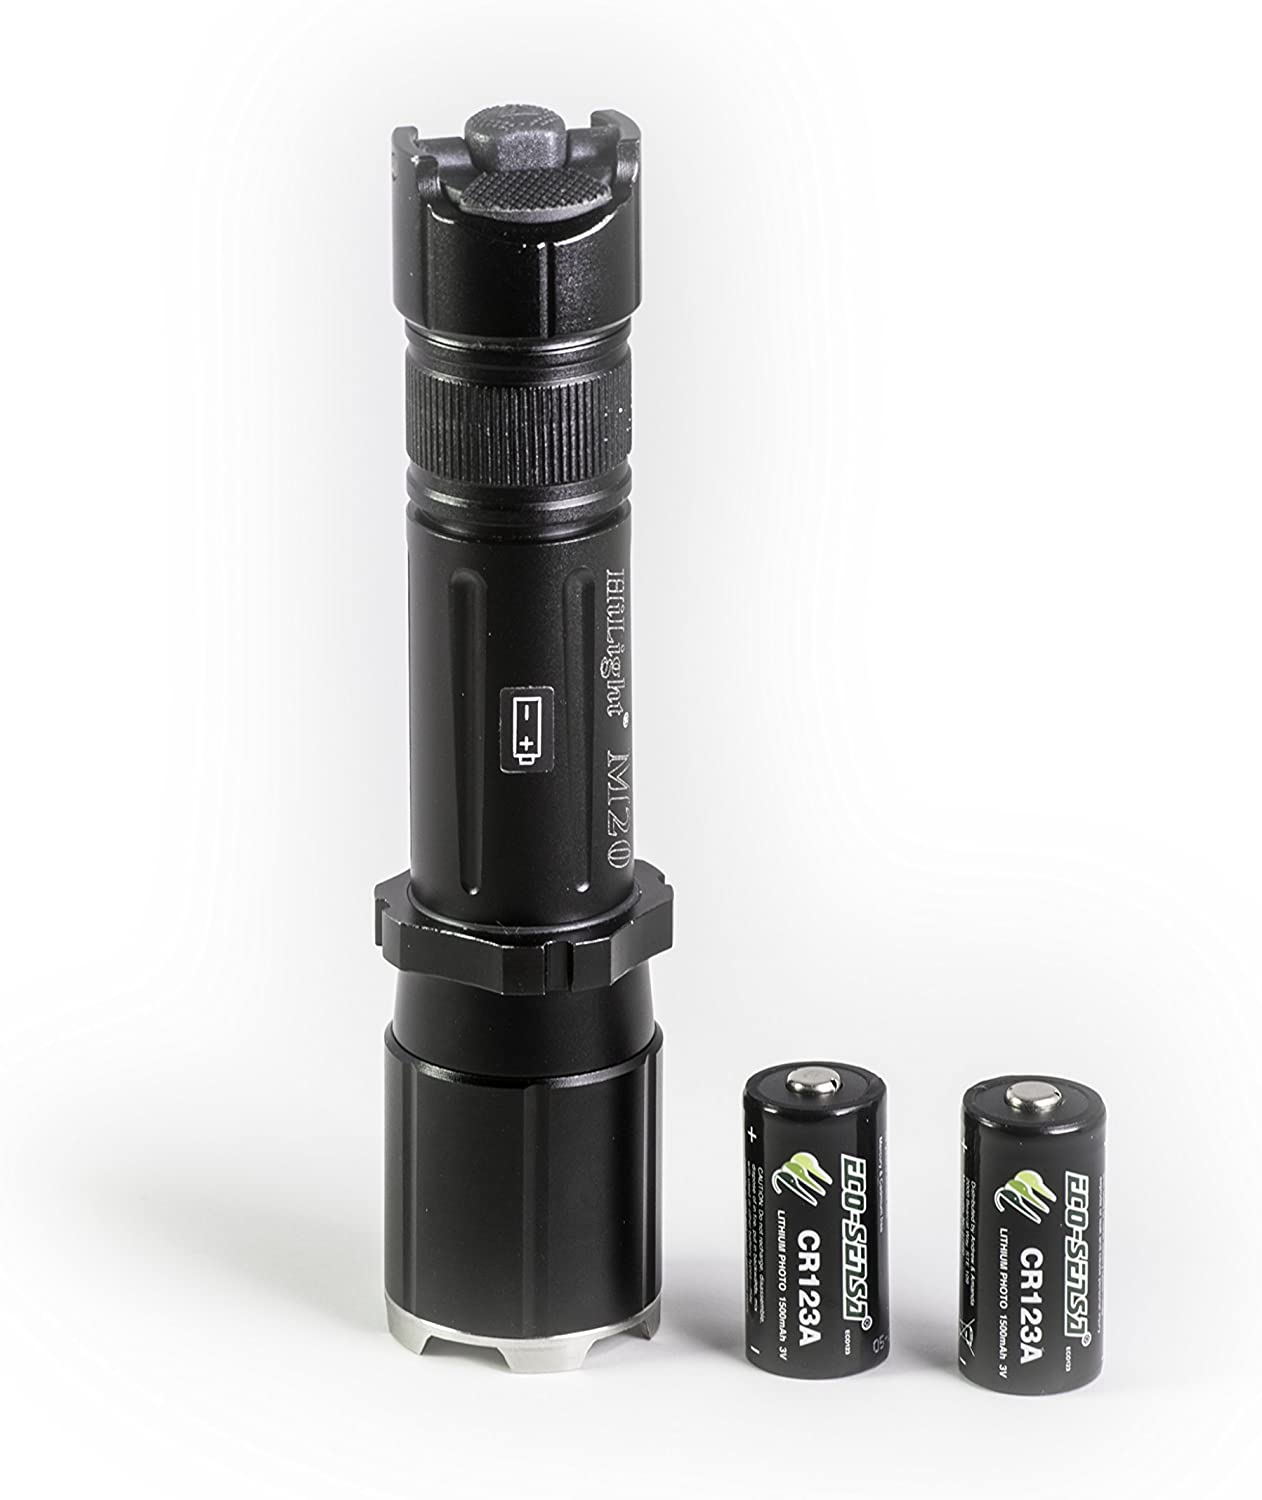 HiLight M20 1000 Lumen Bright Handhold Flashlight CREE XM-L2 U2 LED Waterproof Light (Black)